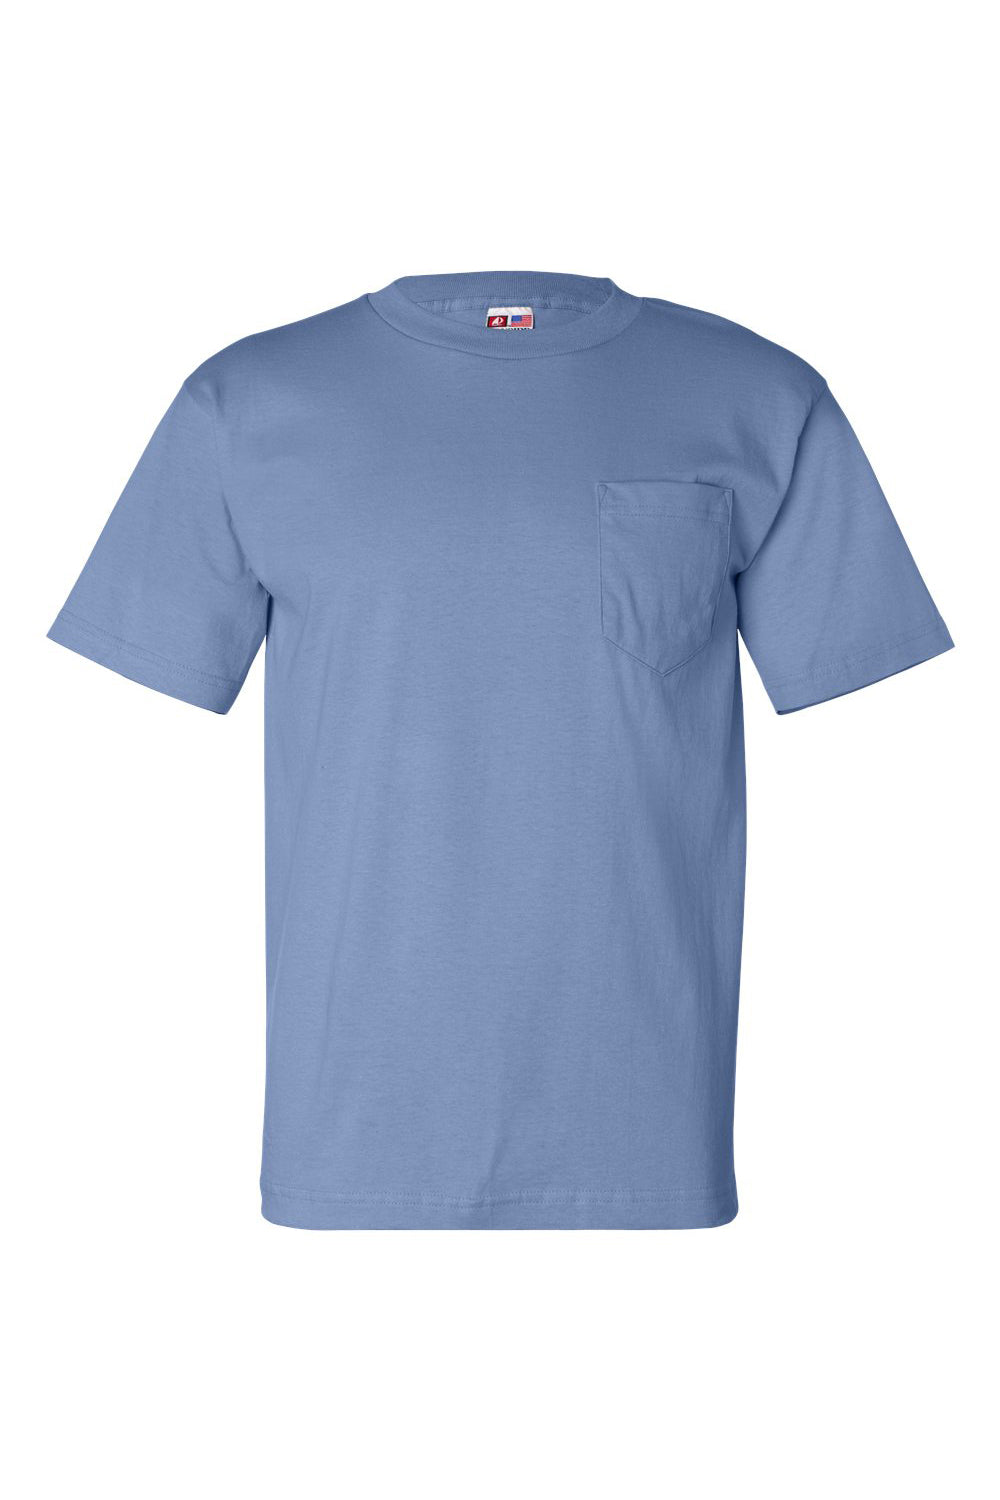 Bayside BA7100 Mens USA Made Short Sleeve Crewneck T-Shirt w/ Pocket Carolina Blue Flat Front